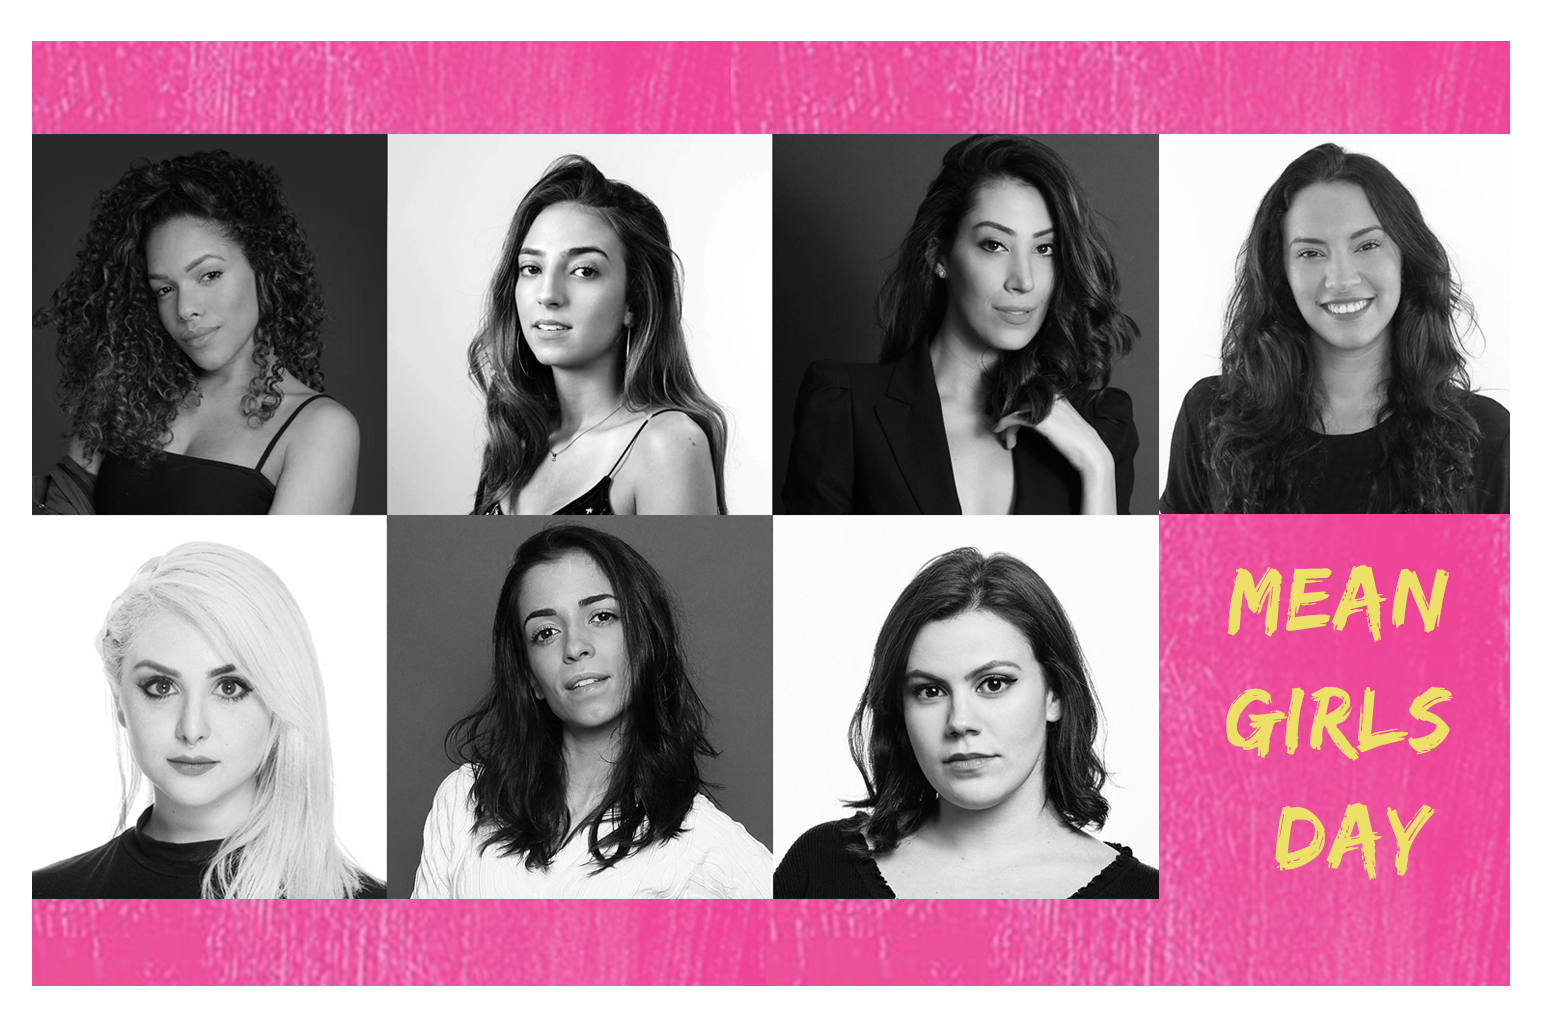 Artistas de teatro musical apresentam no programa 'Mean Girls Day'